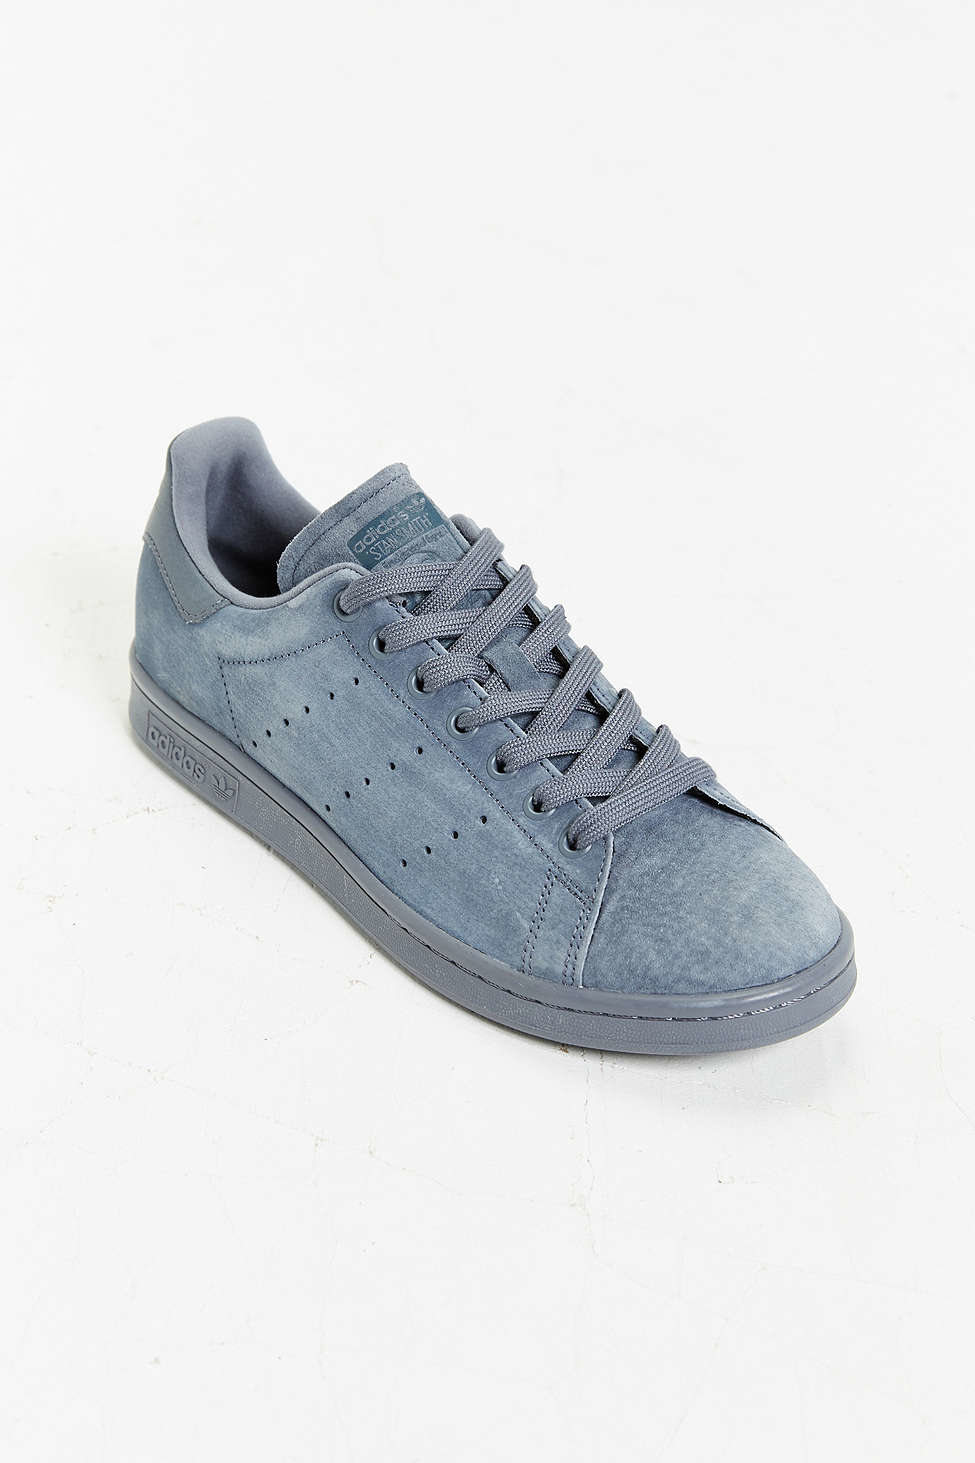 adidas Originals Suede Stan Smith Sneaker in Dark Grey (Gray) for Men - Lyst